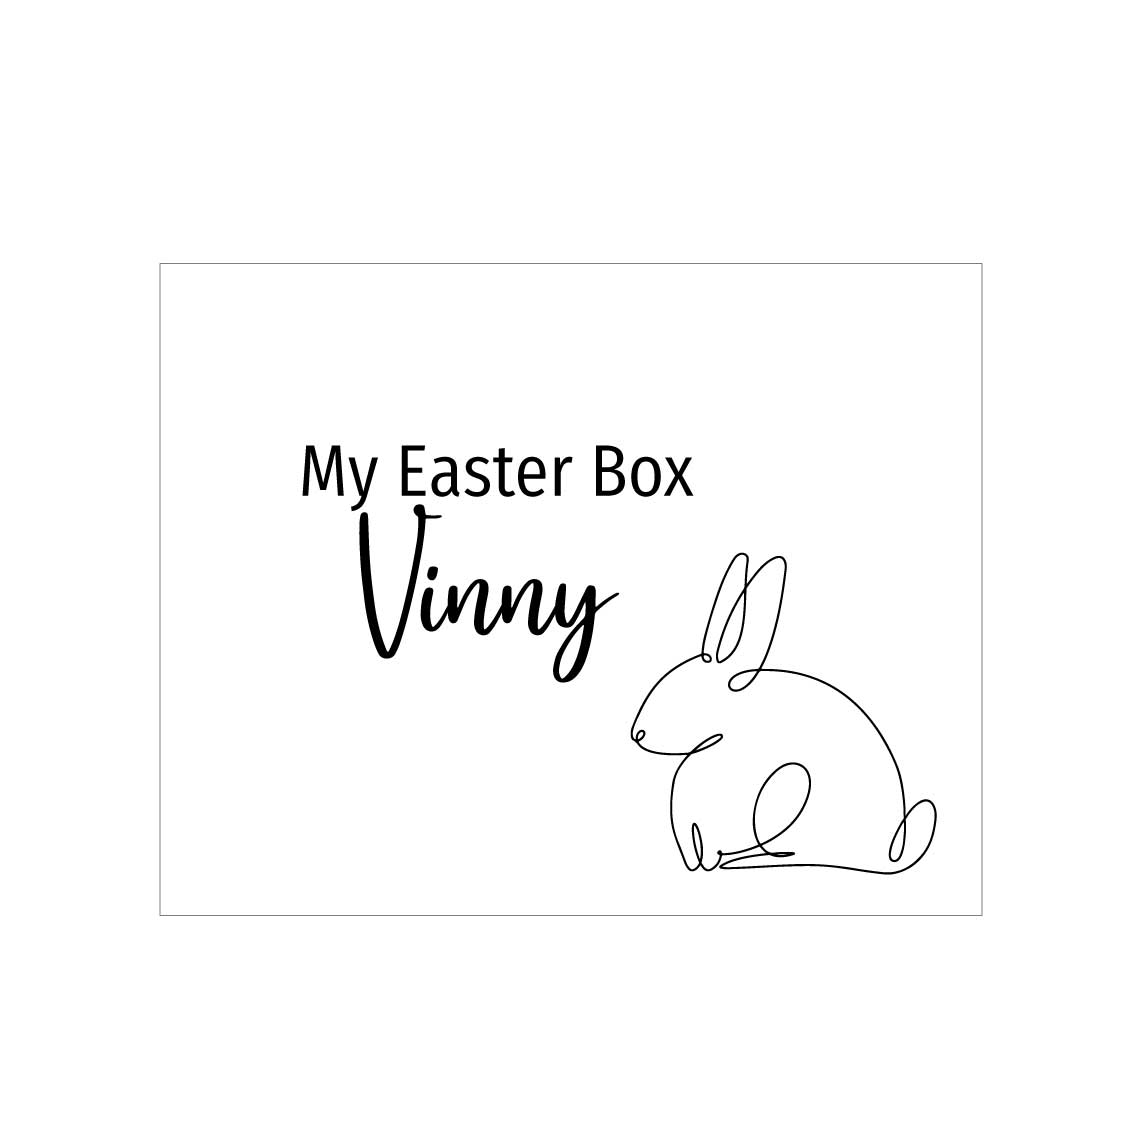 The Vinny Easter Box